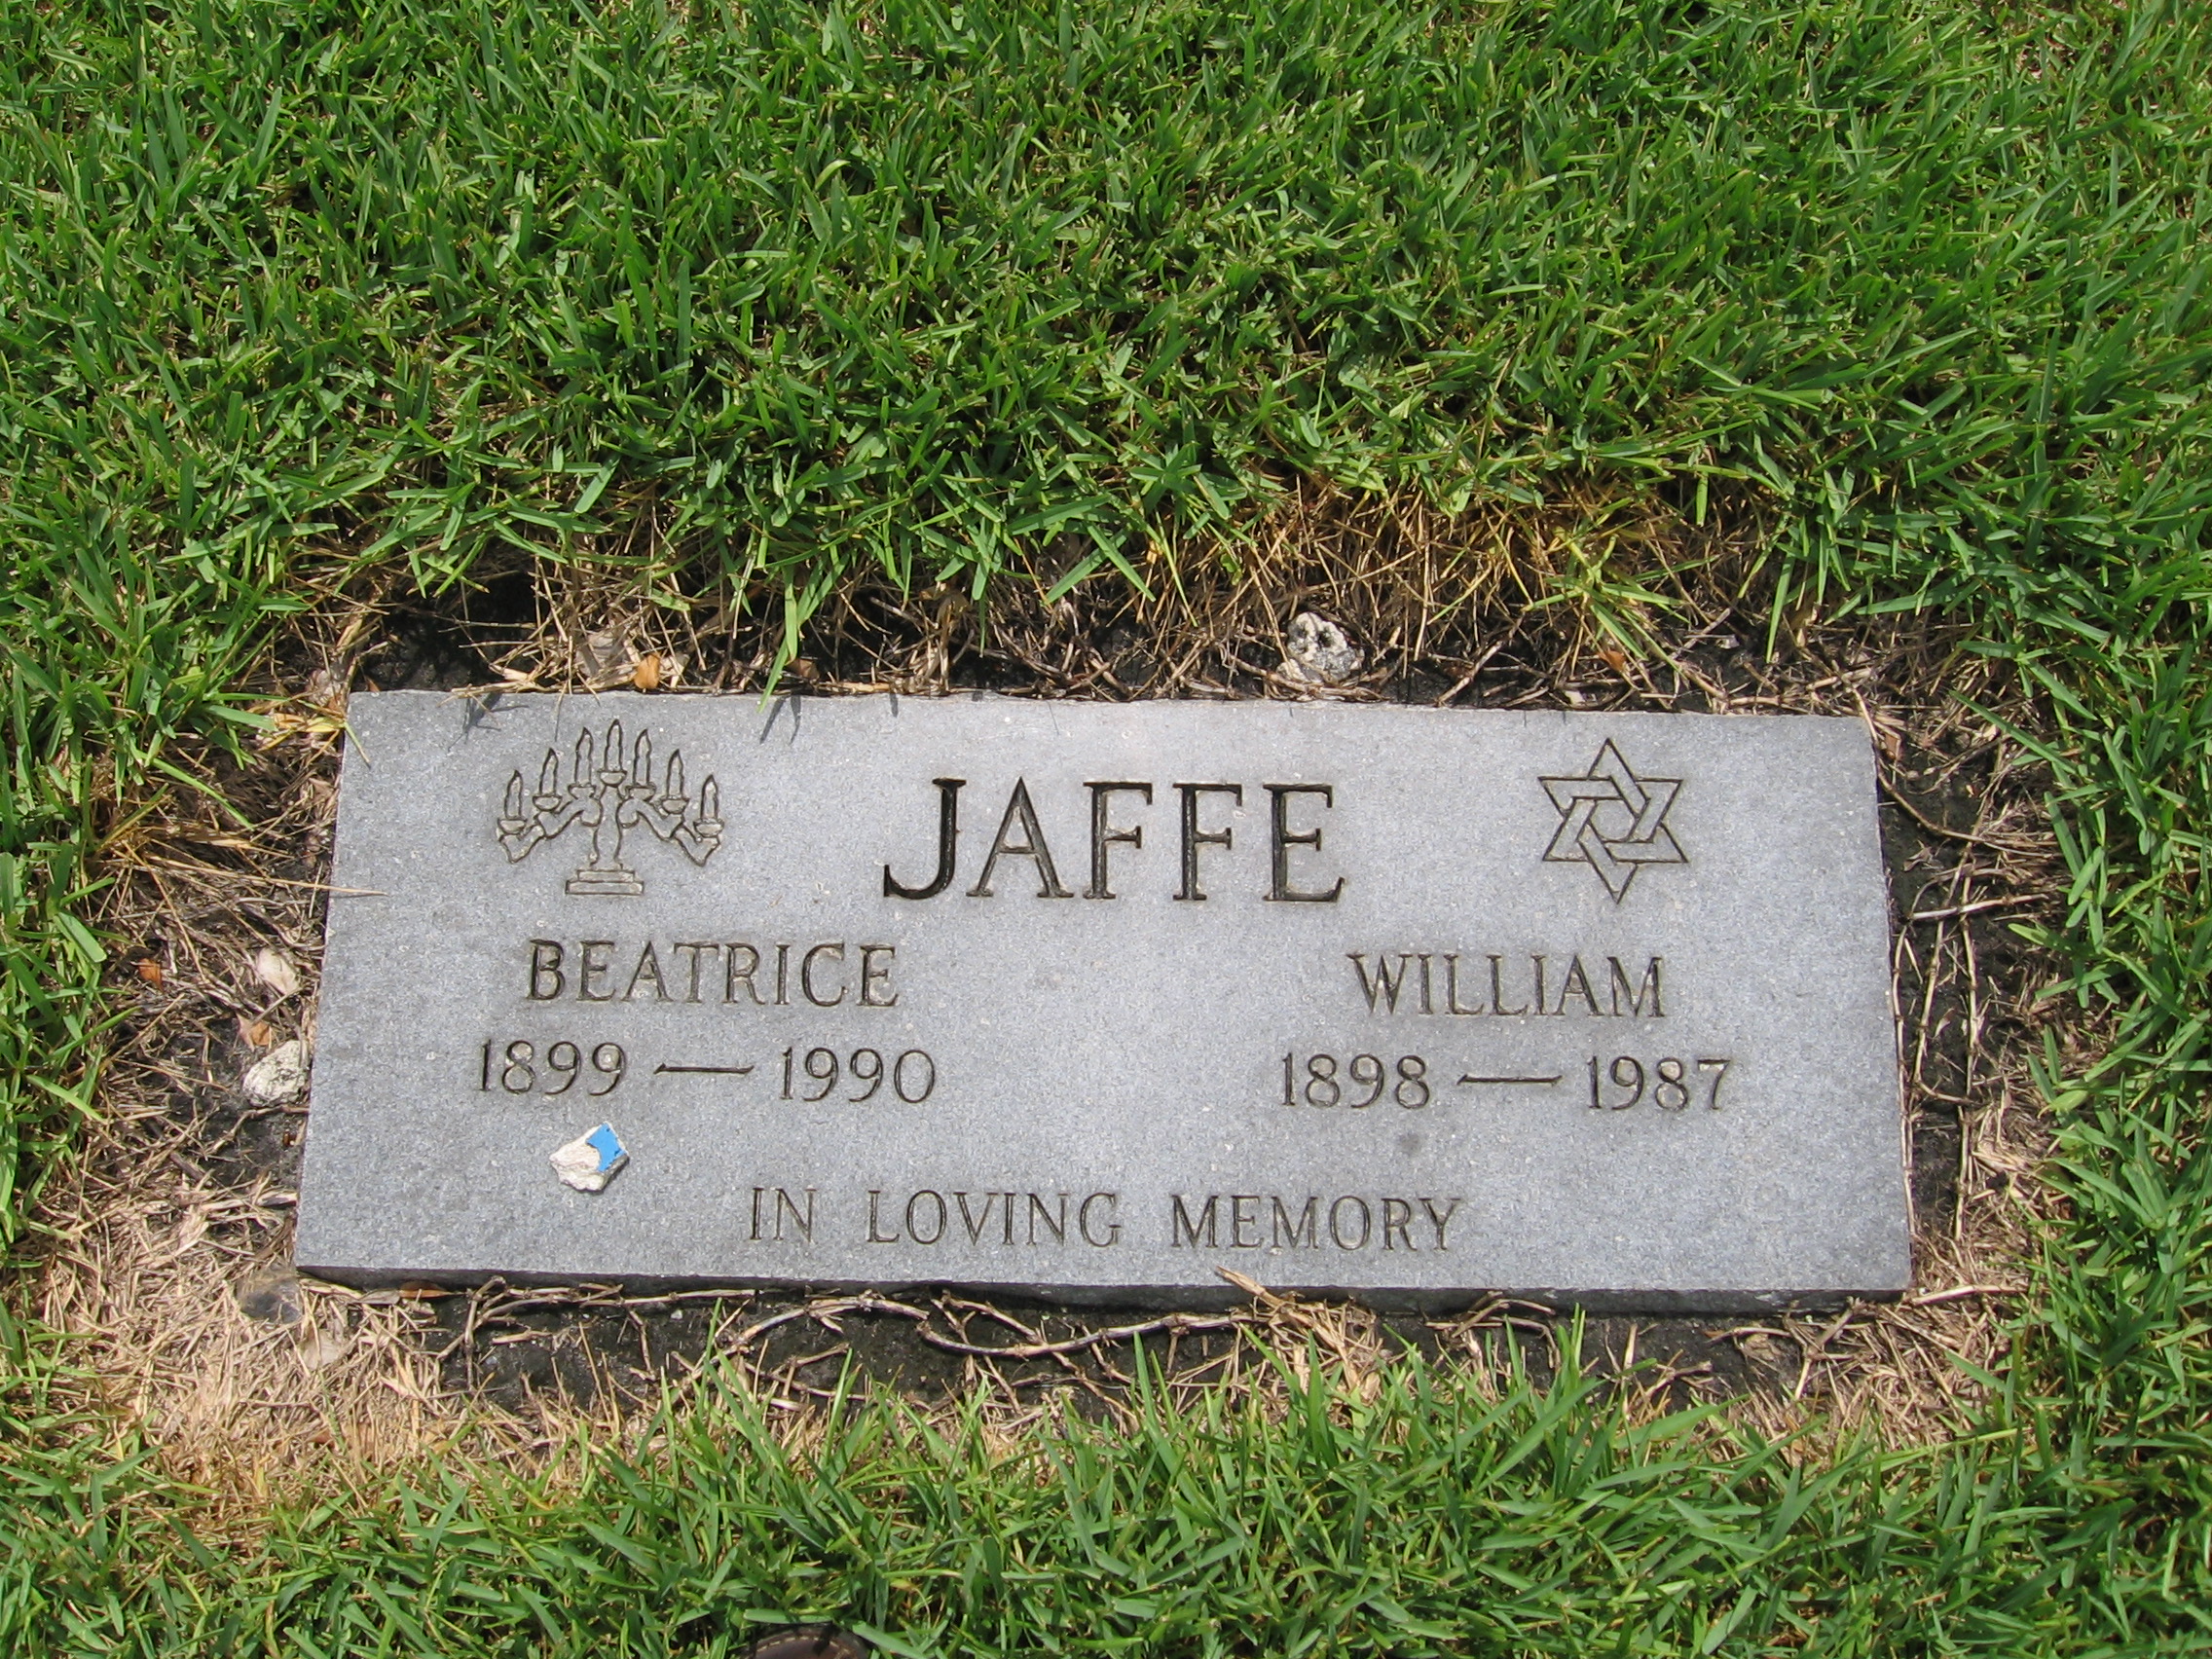 Beatrice Jaffe